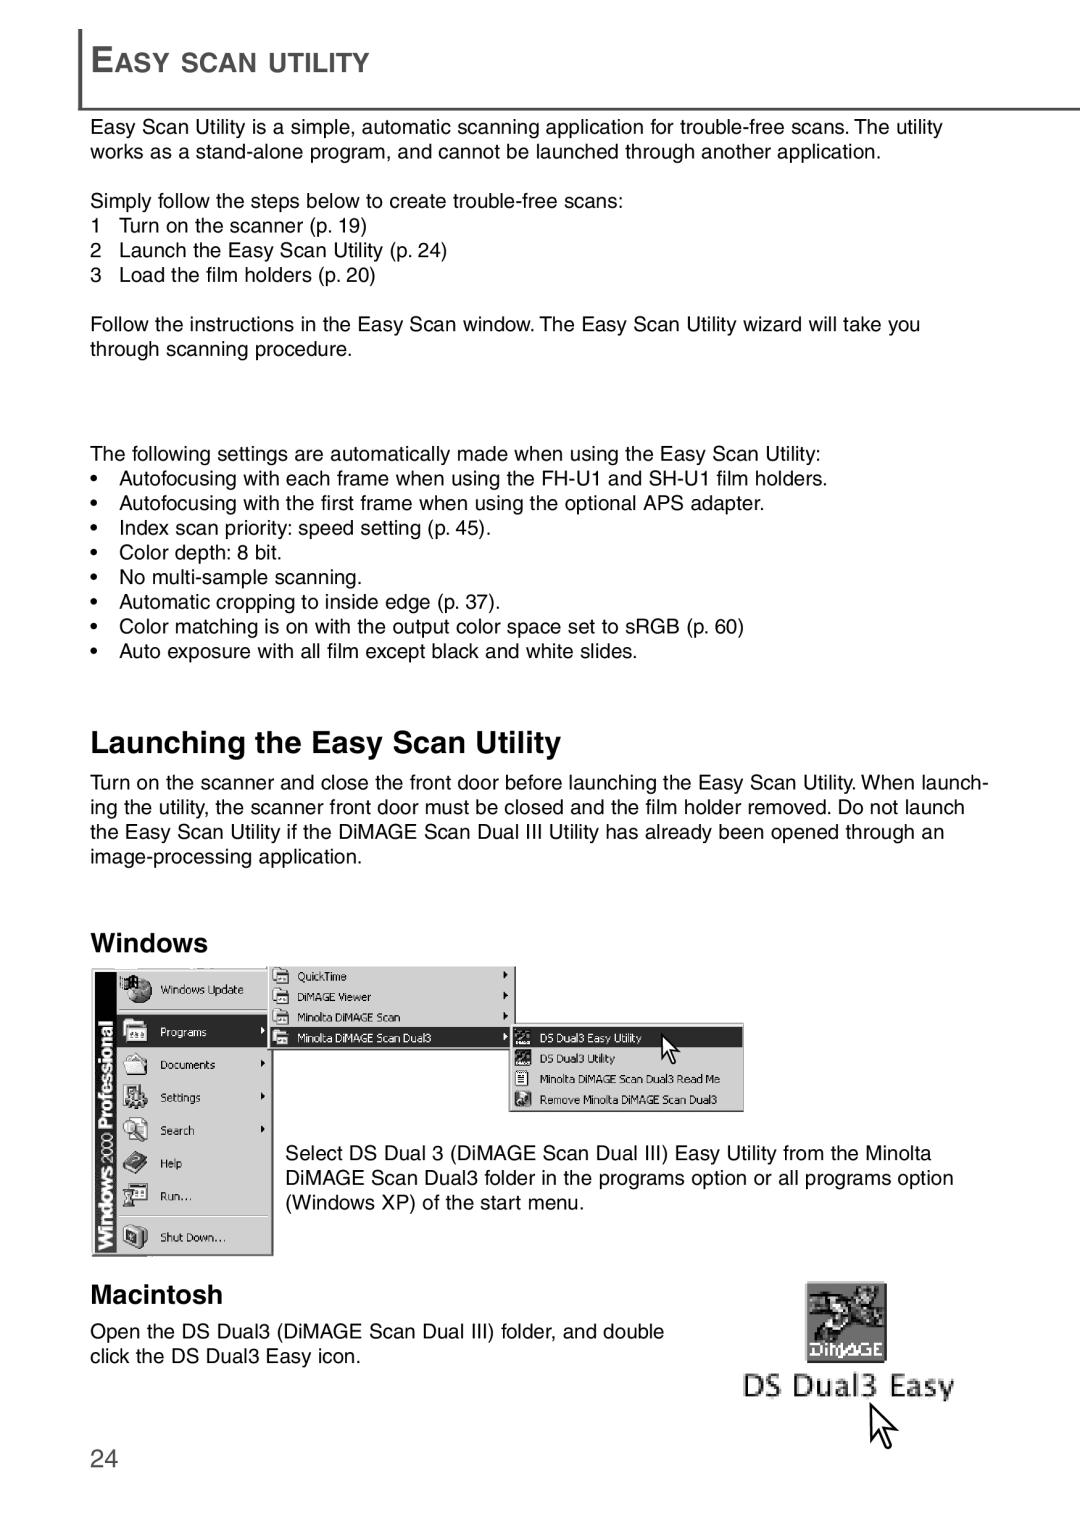 Konica Minolta AF-2840 instruction manual Launching the Easy Scan Utility, Windows, Macintosh 